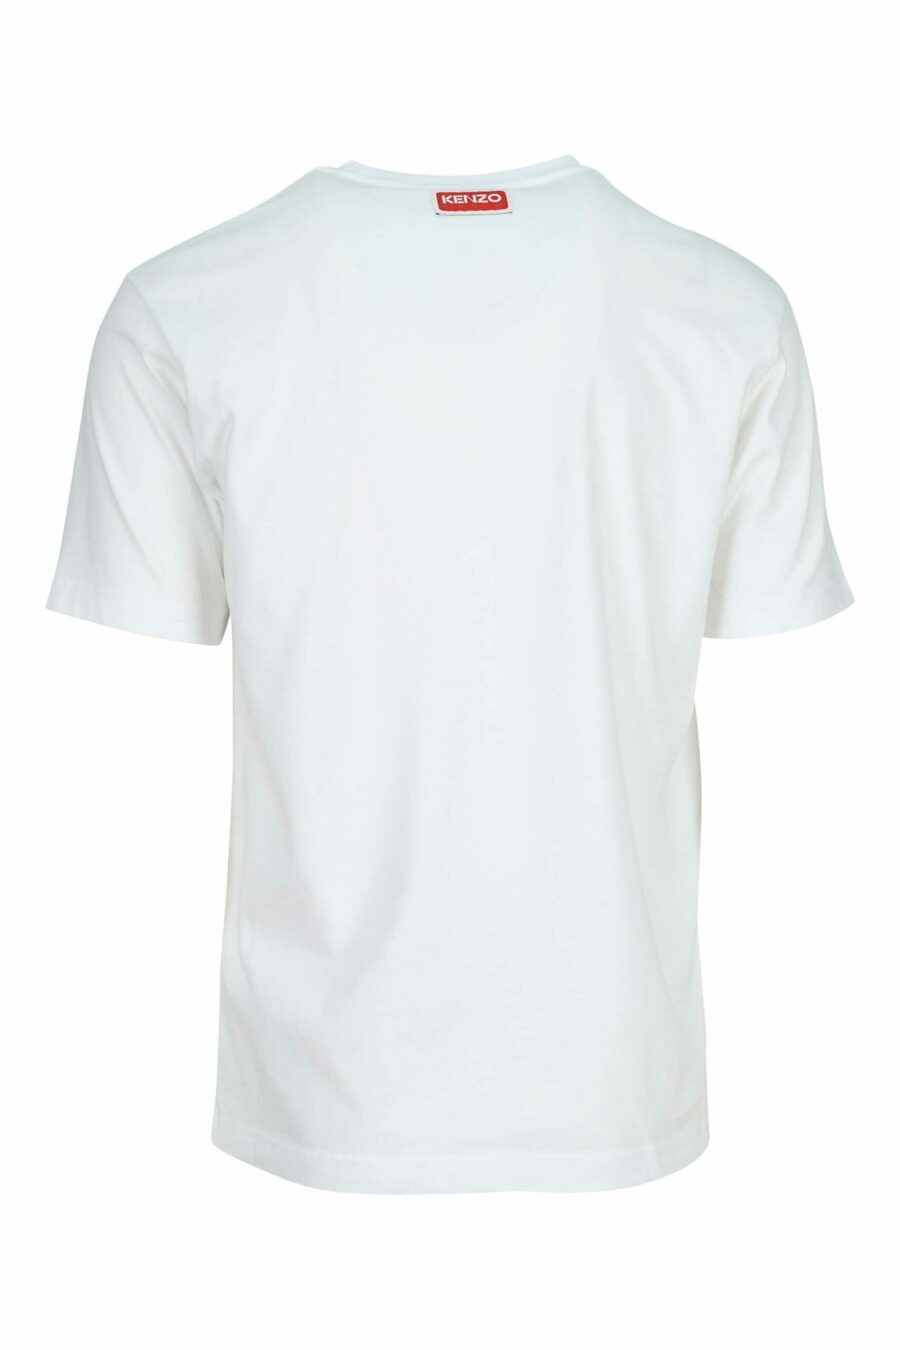 White T-shirt with multicoloured tiger maxilogo - 3612230625136 1 scaled